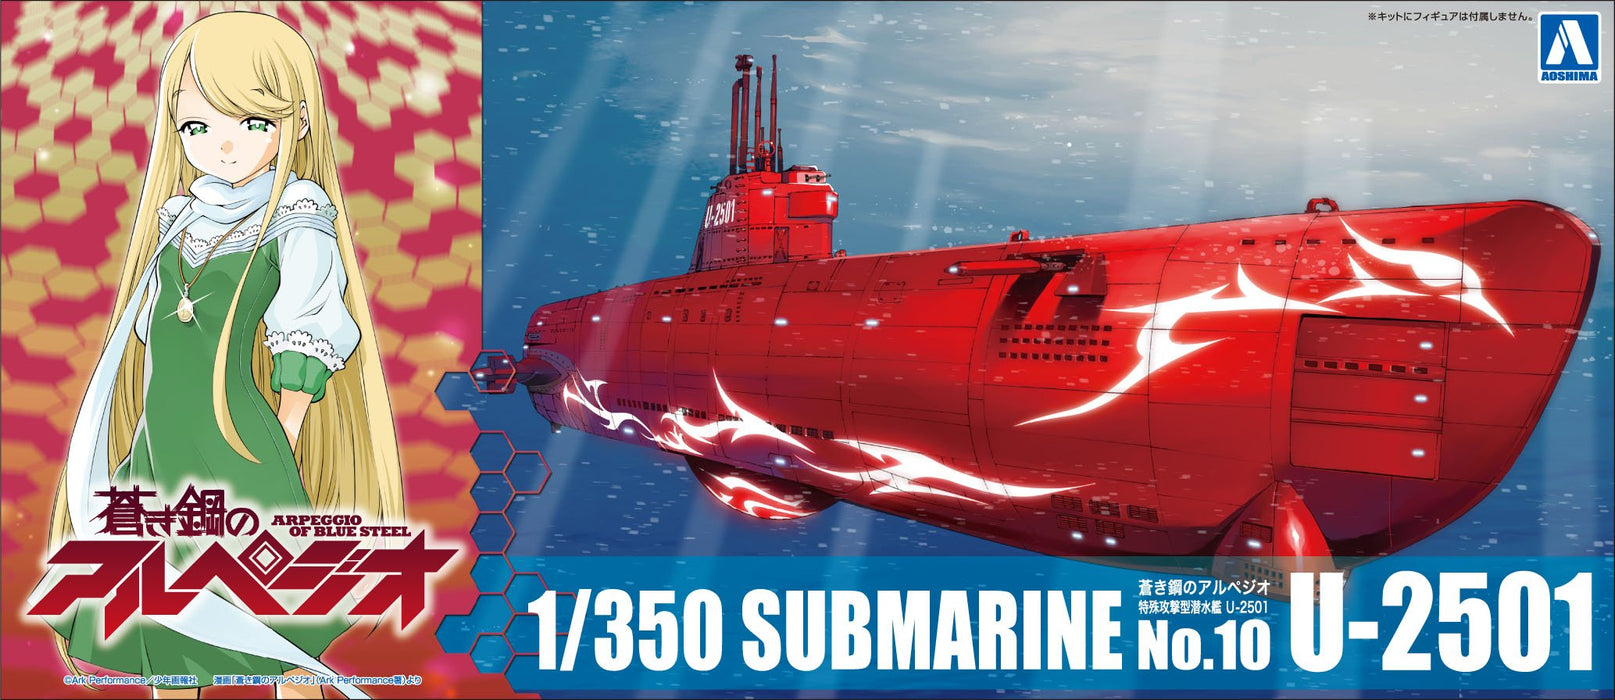 Aoshima Bunka Kyozaisha Arpeggio aus blauem Stahl -Ars Nova- No.10 Special Attack Submarine U-2501 Kunststoffmodell im Maßstab 1:700